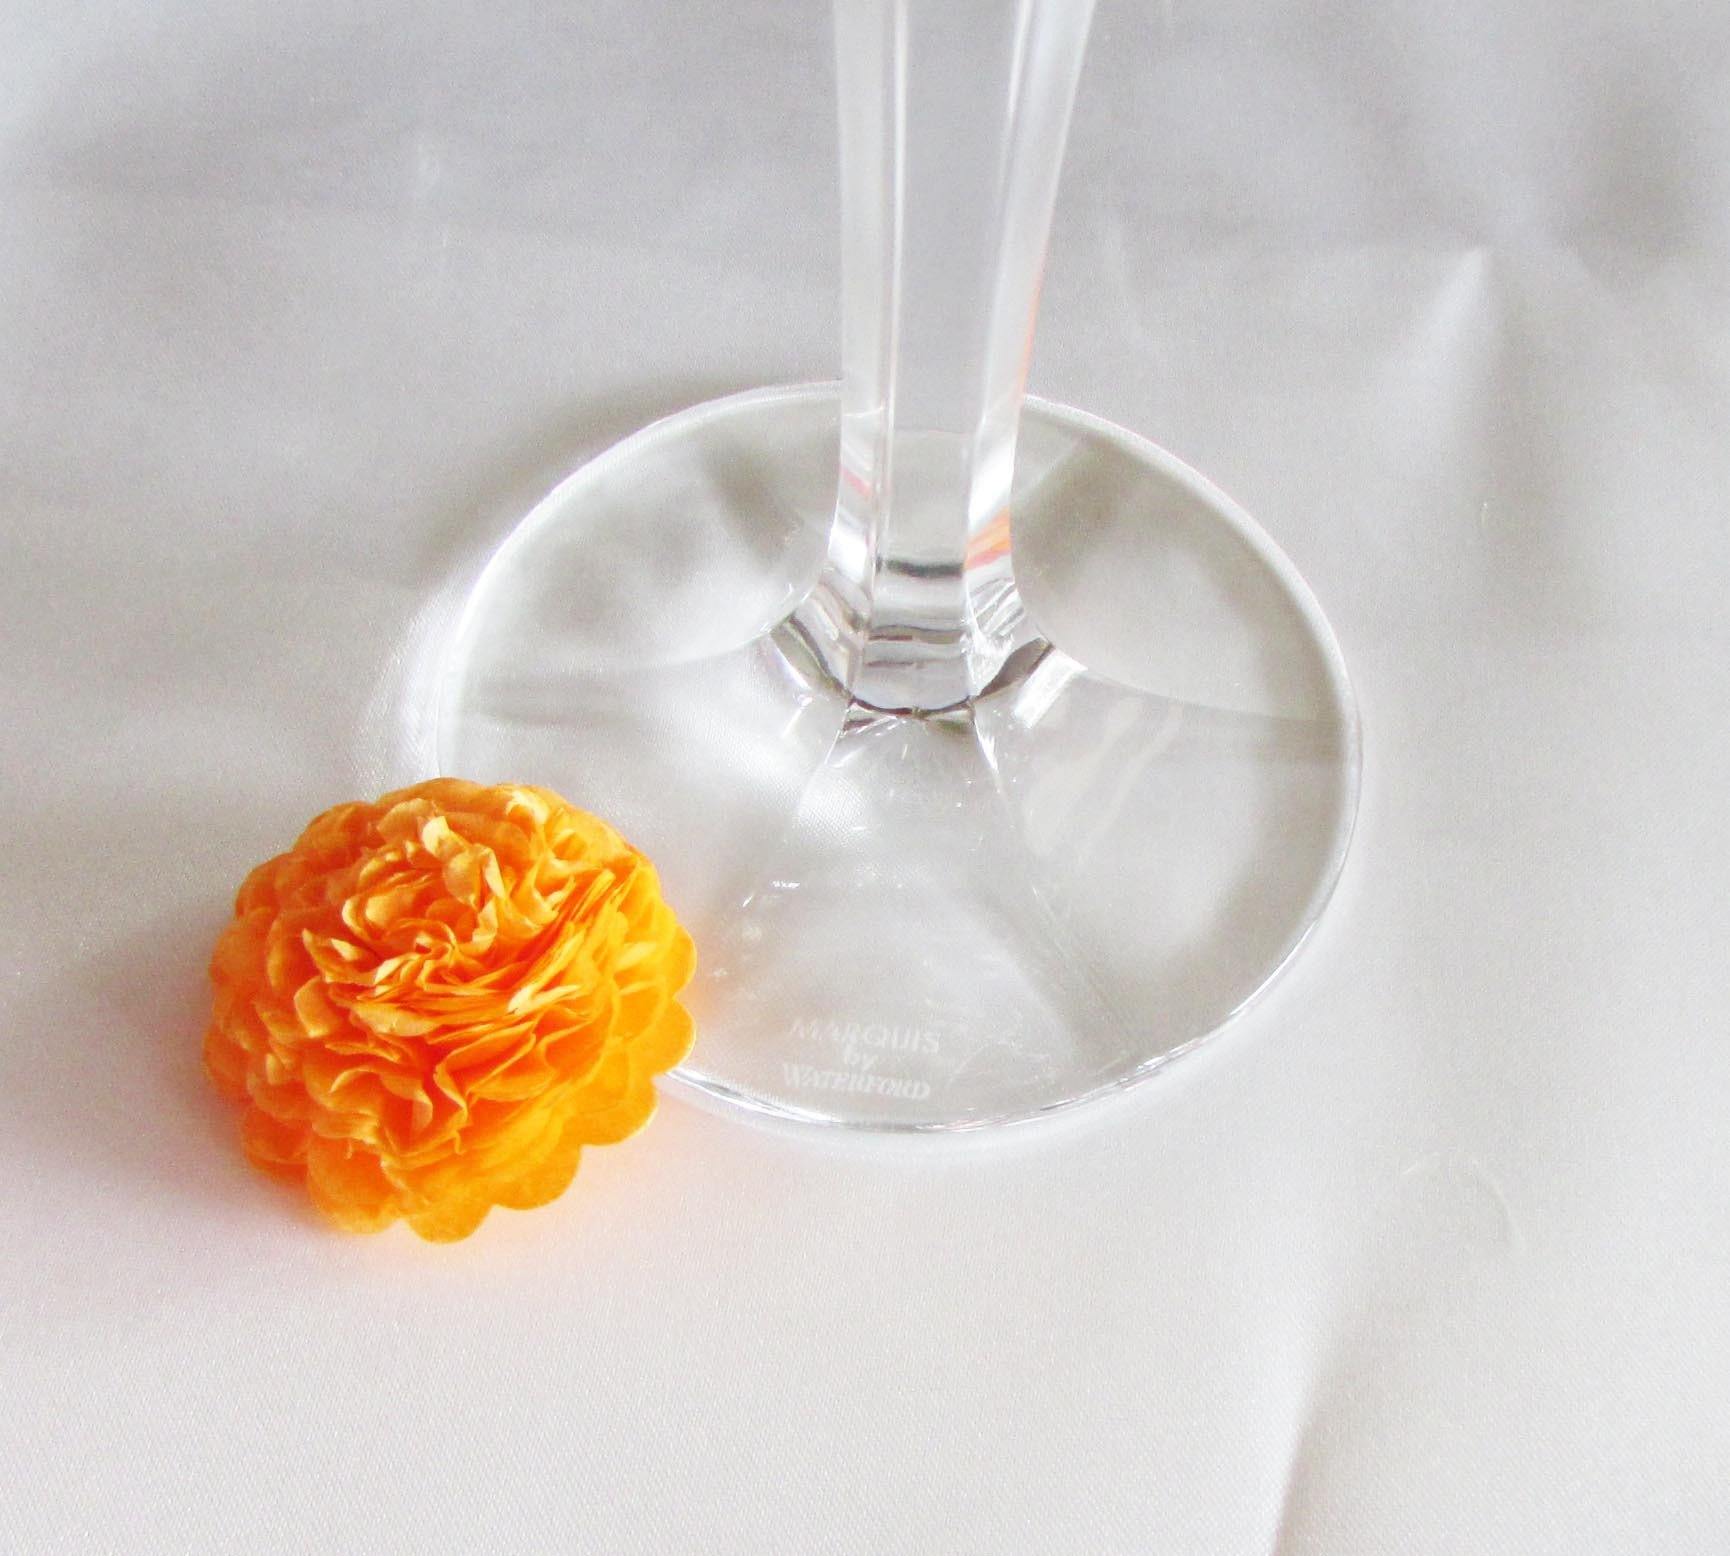 Apricot Orange Button Mums Tissue Paper Flowers - Bickiboo Designs